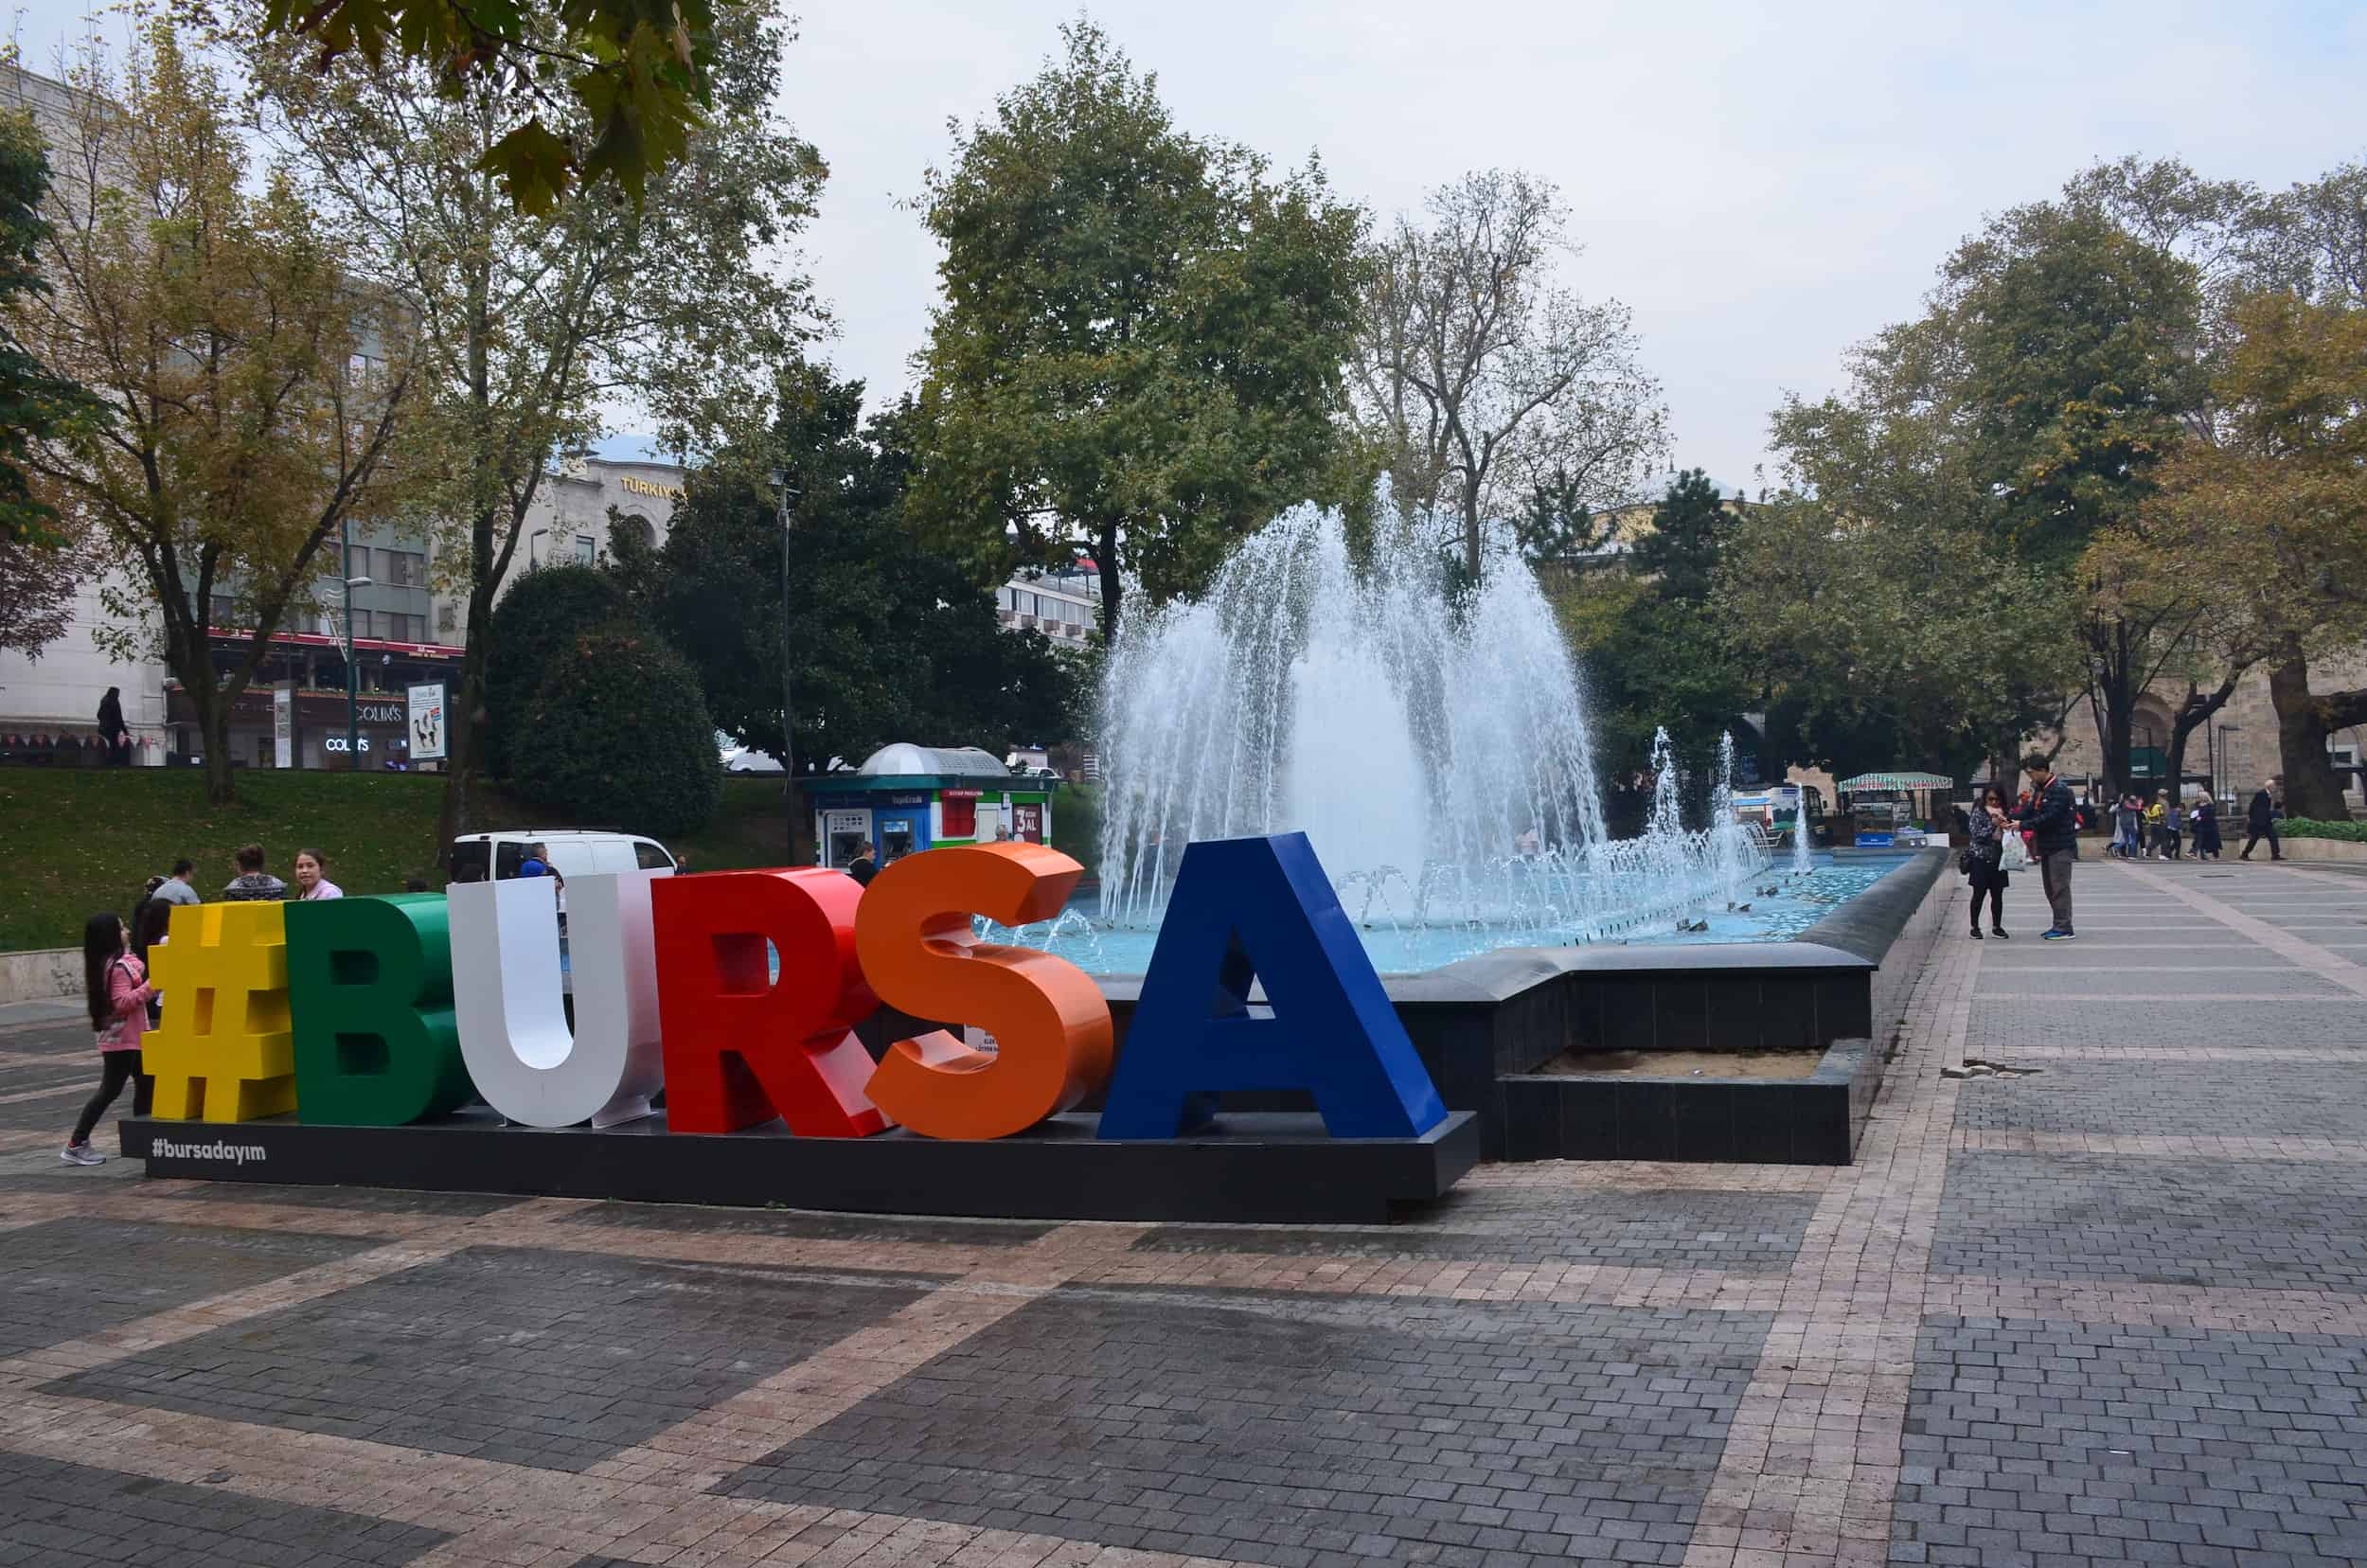 Bursa sign in Gazi Orhan Park in Bursa, Turkey